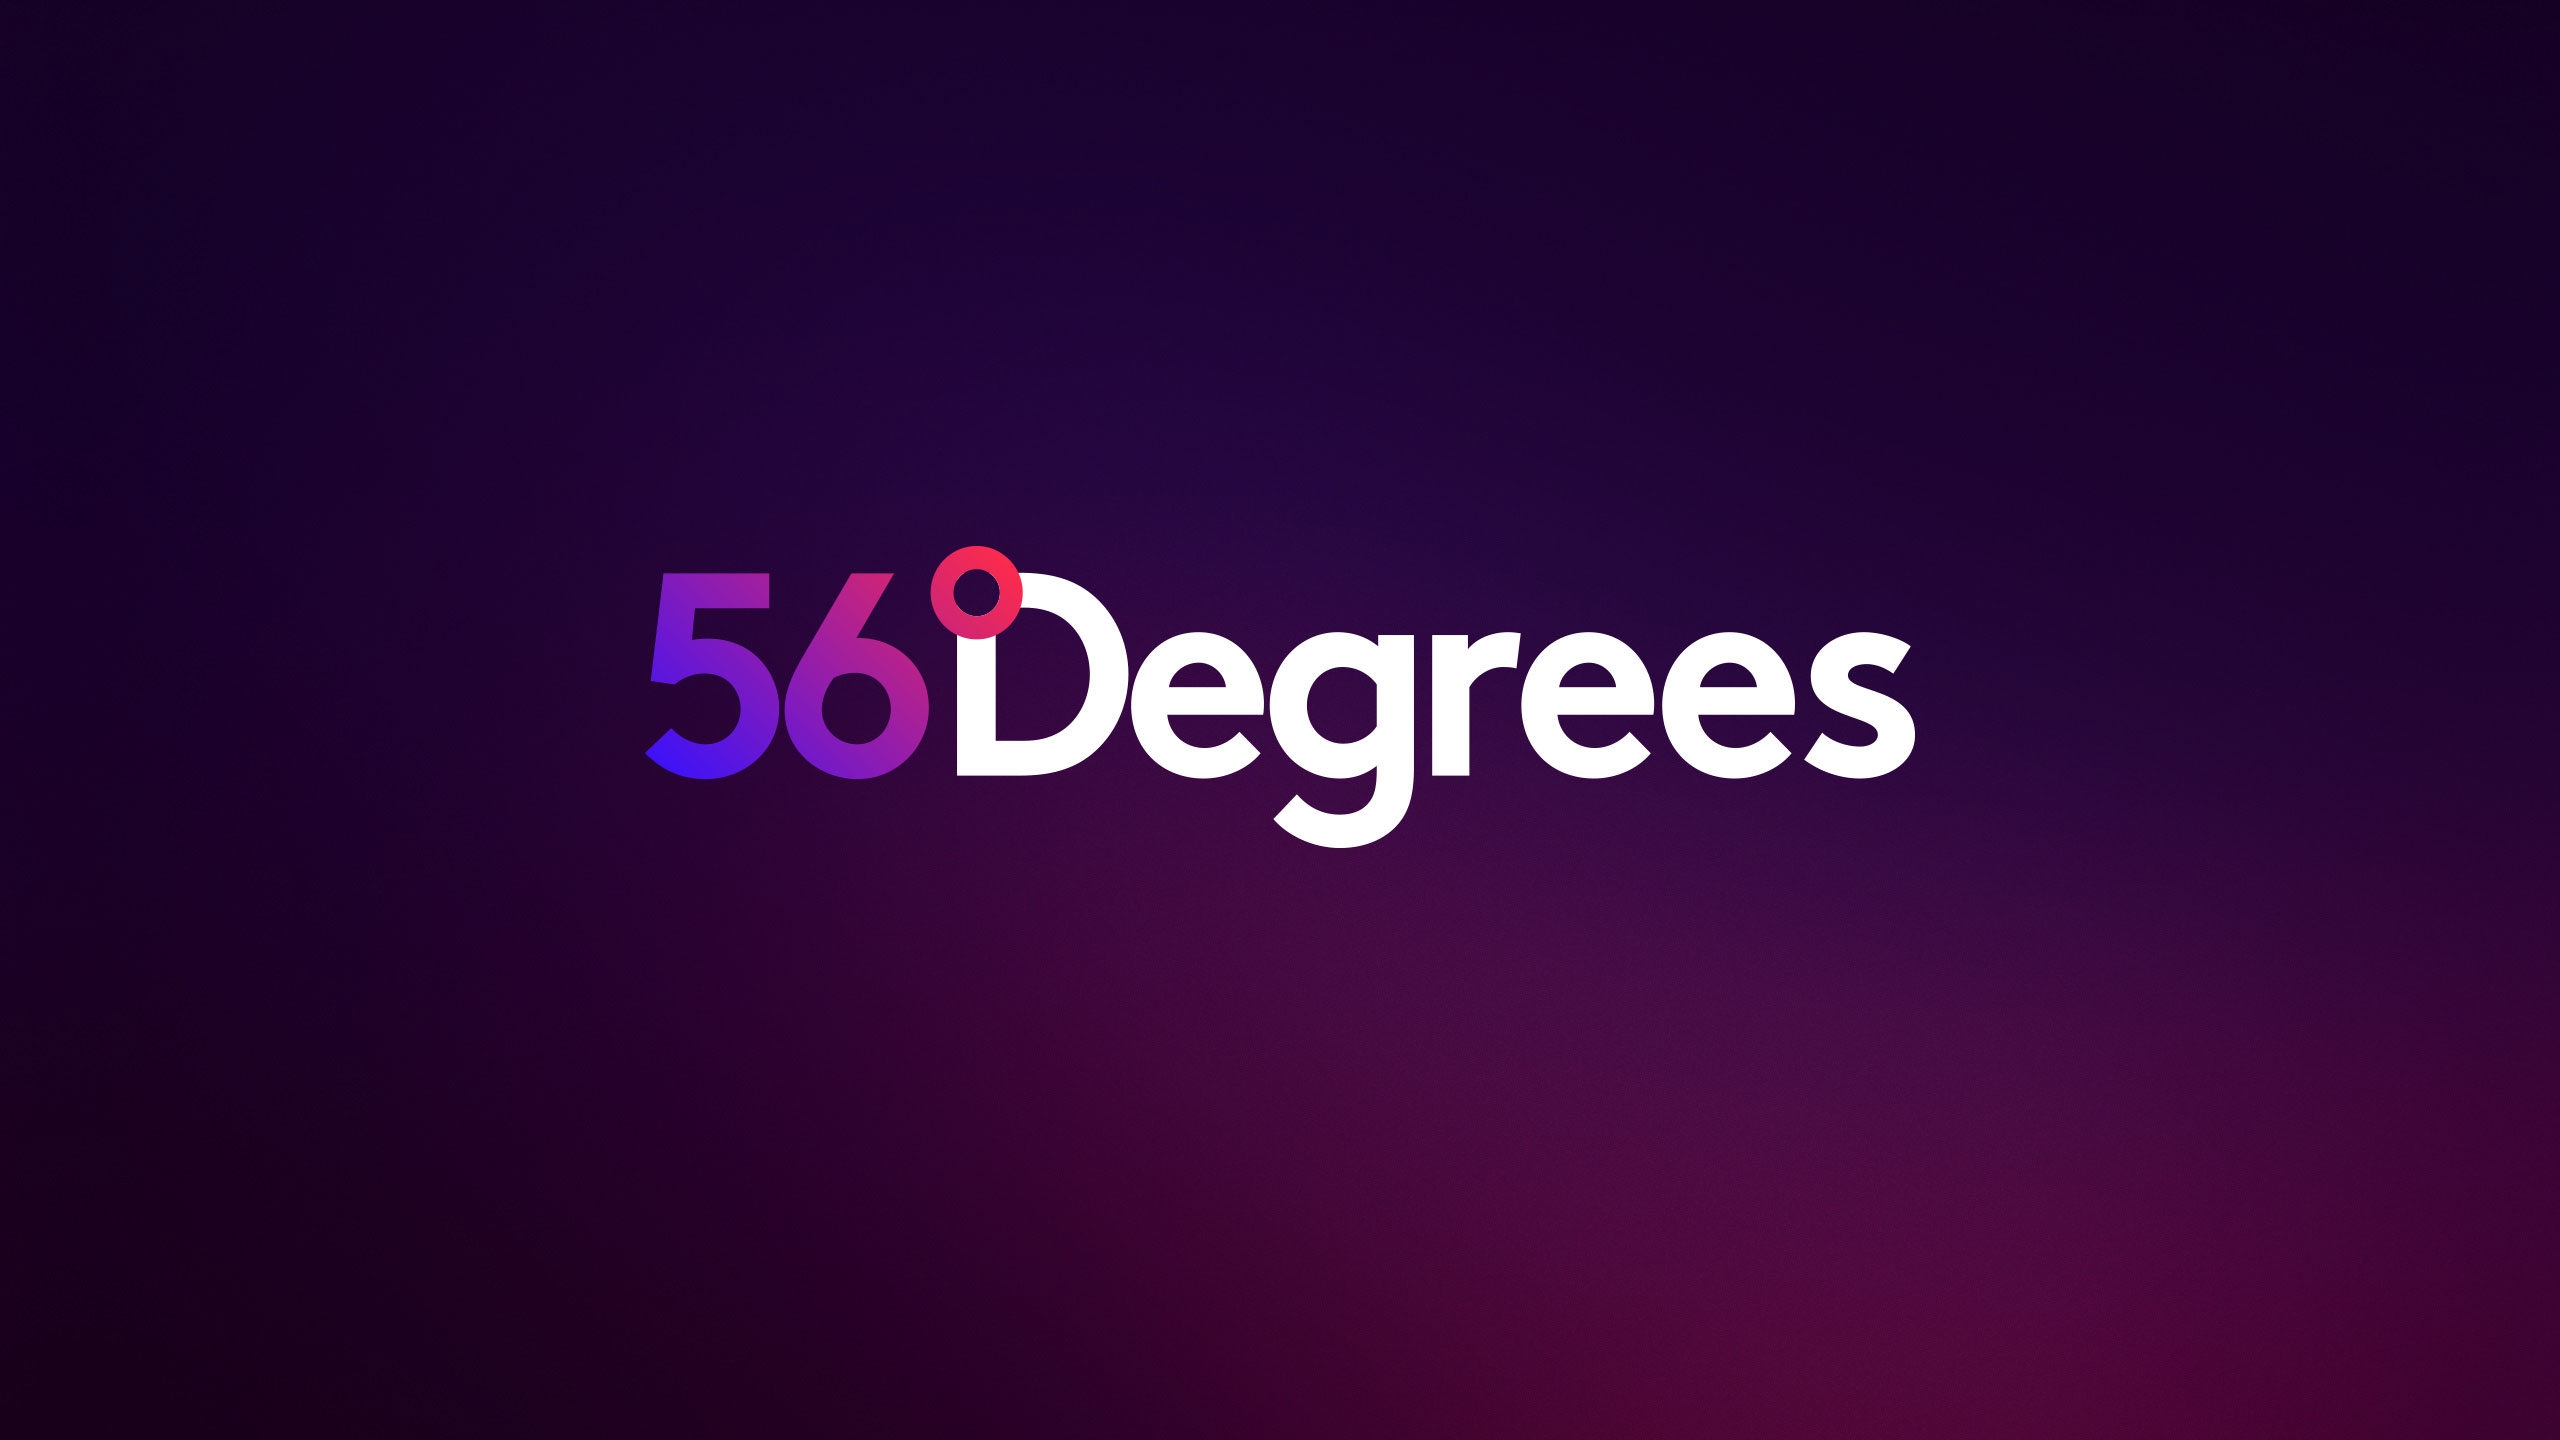 56 Degrees